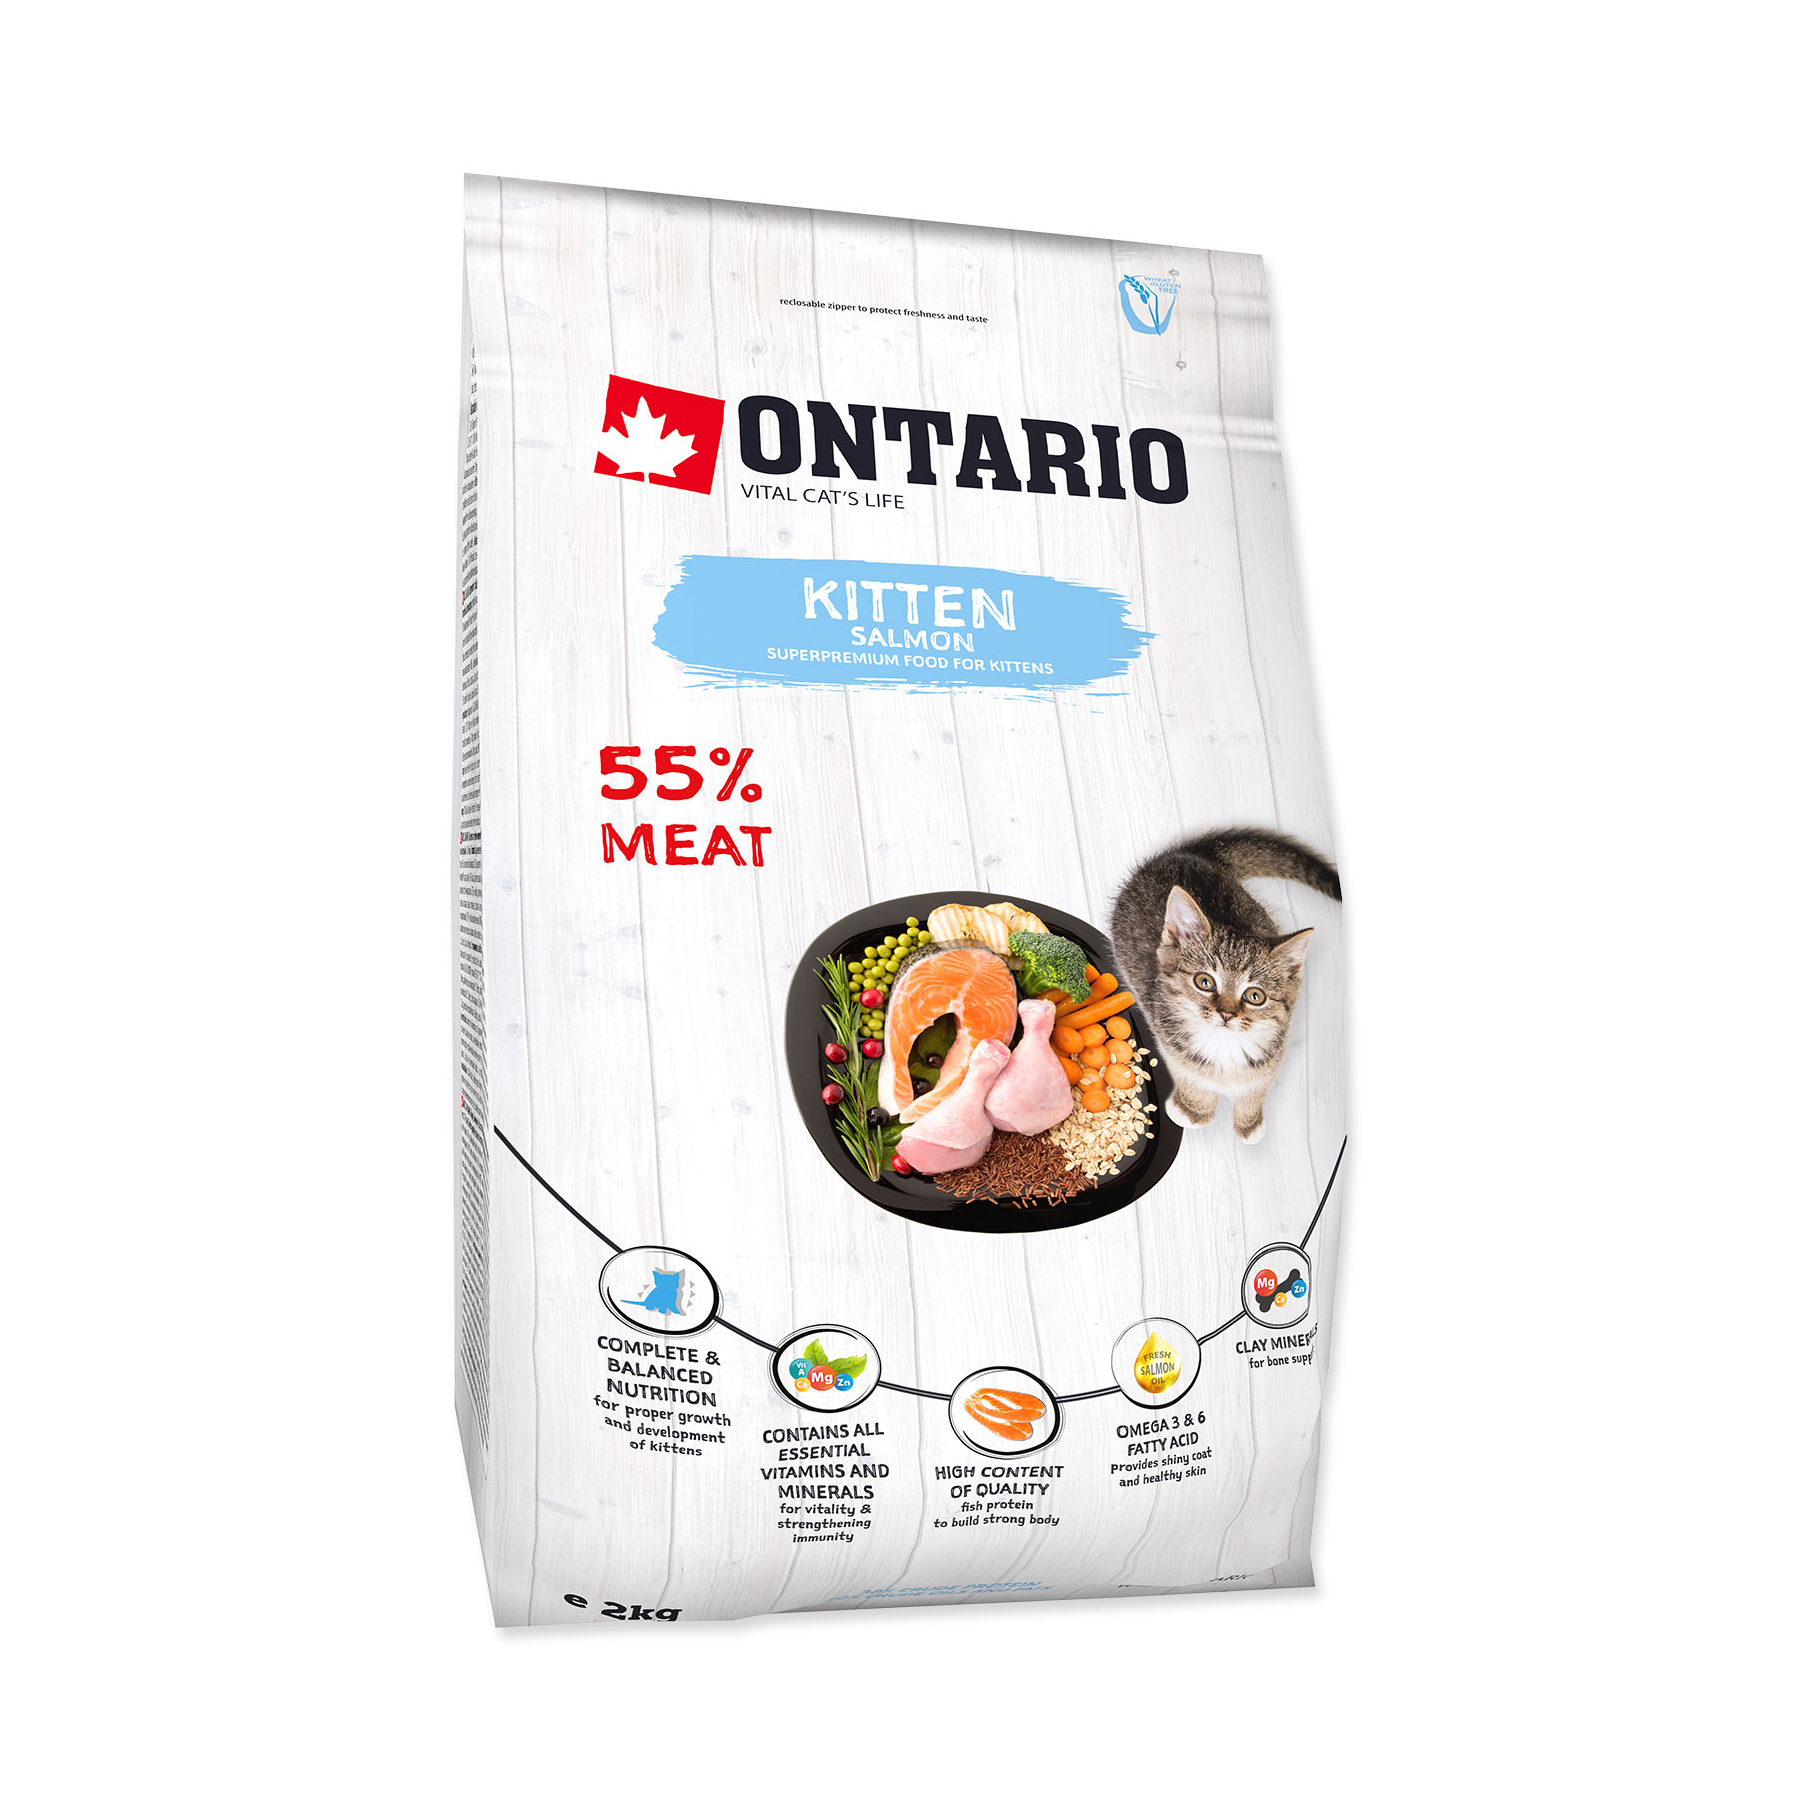 Ontario Kitten Salmon granule 2 kg Ontario